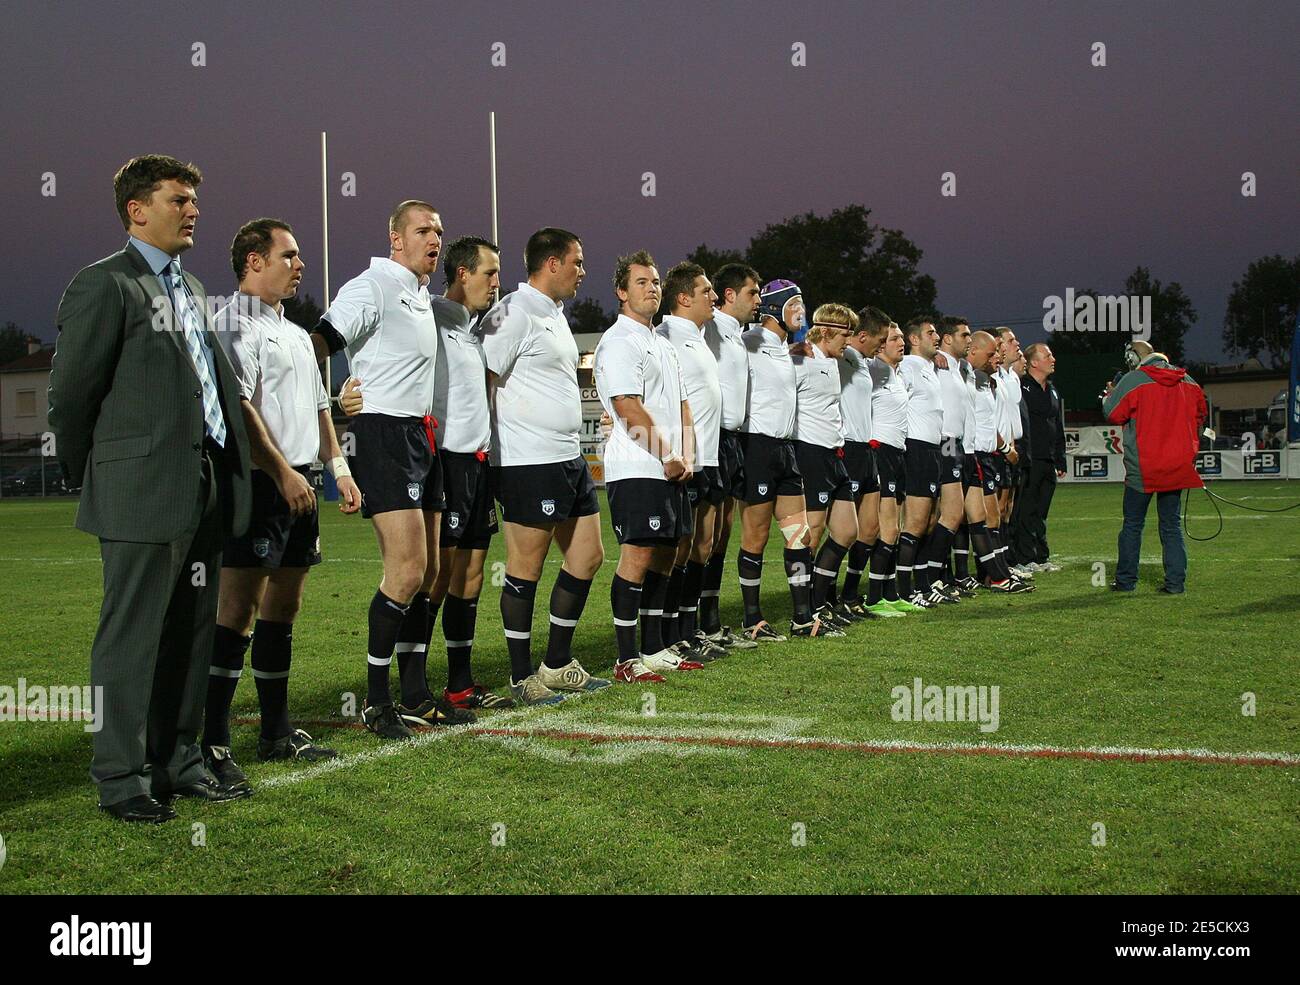 Rugby a xiii immagini e fotografie stock ad alta risoluzione - Alamy